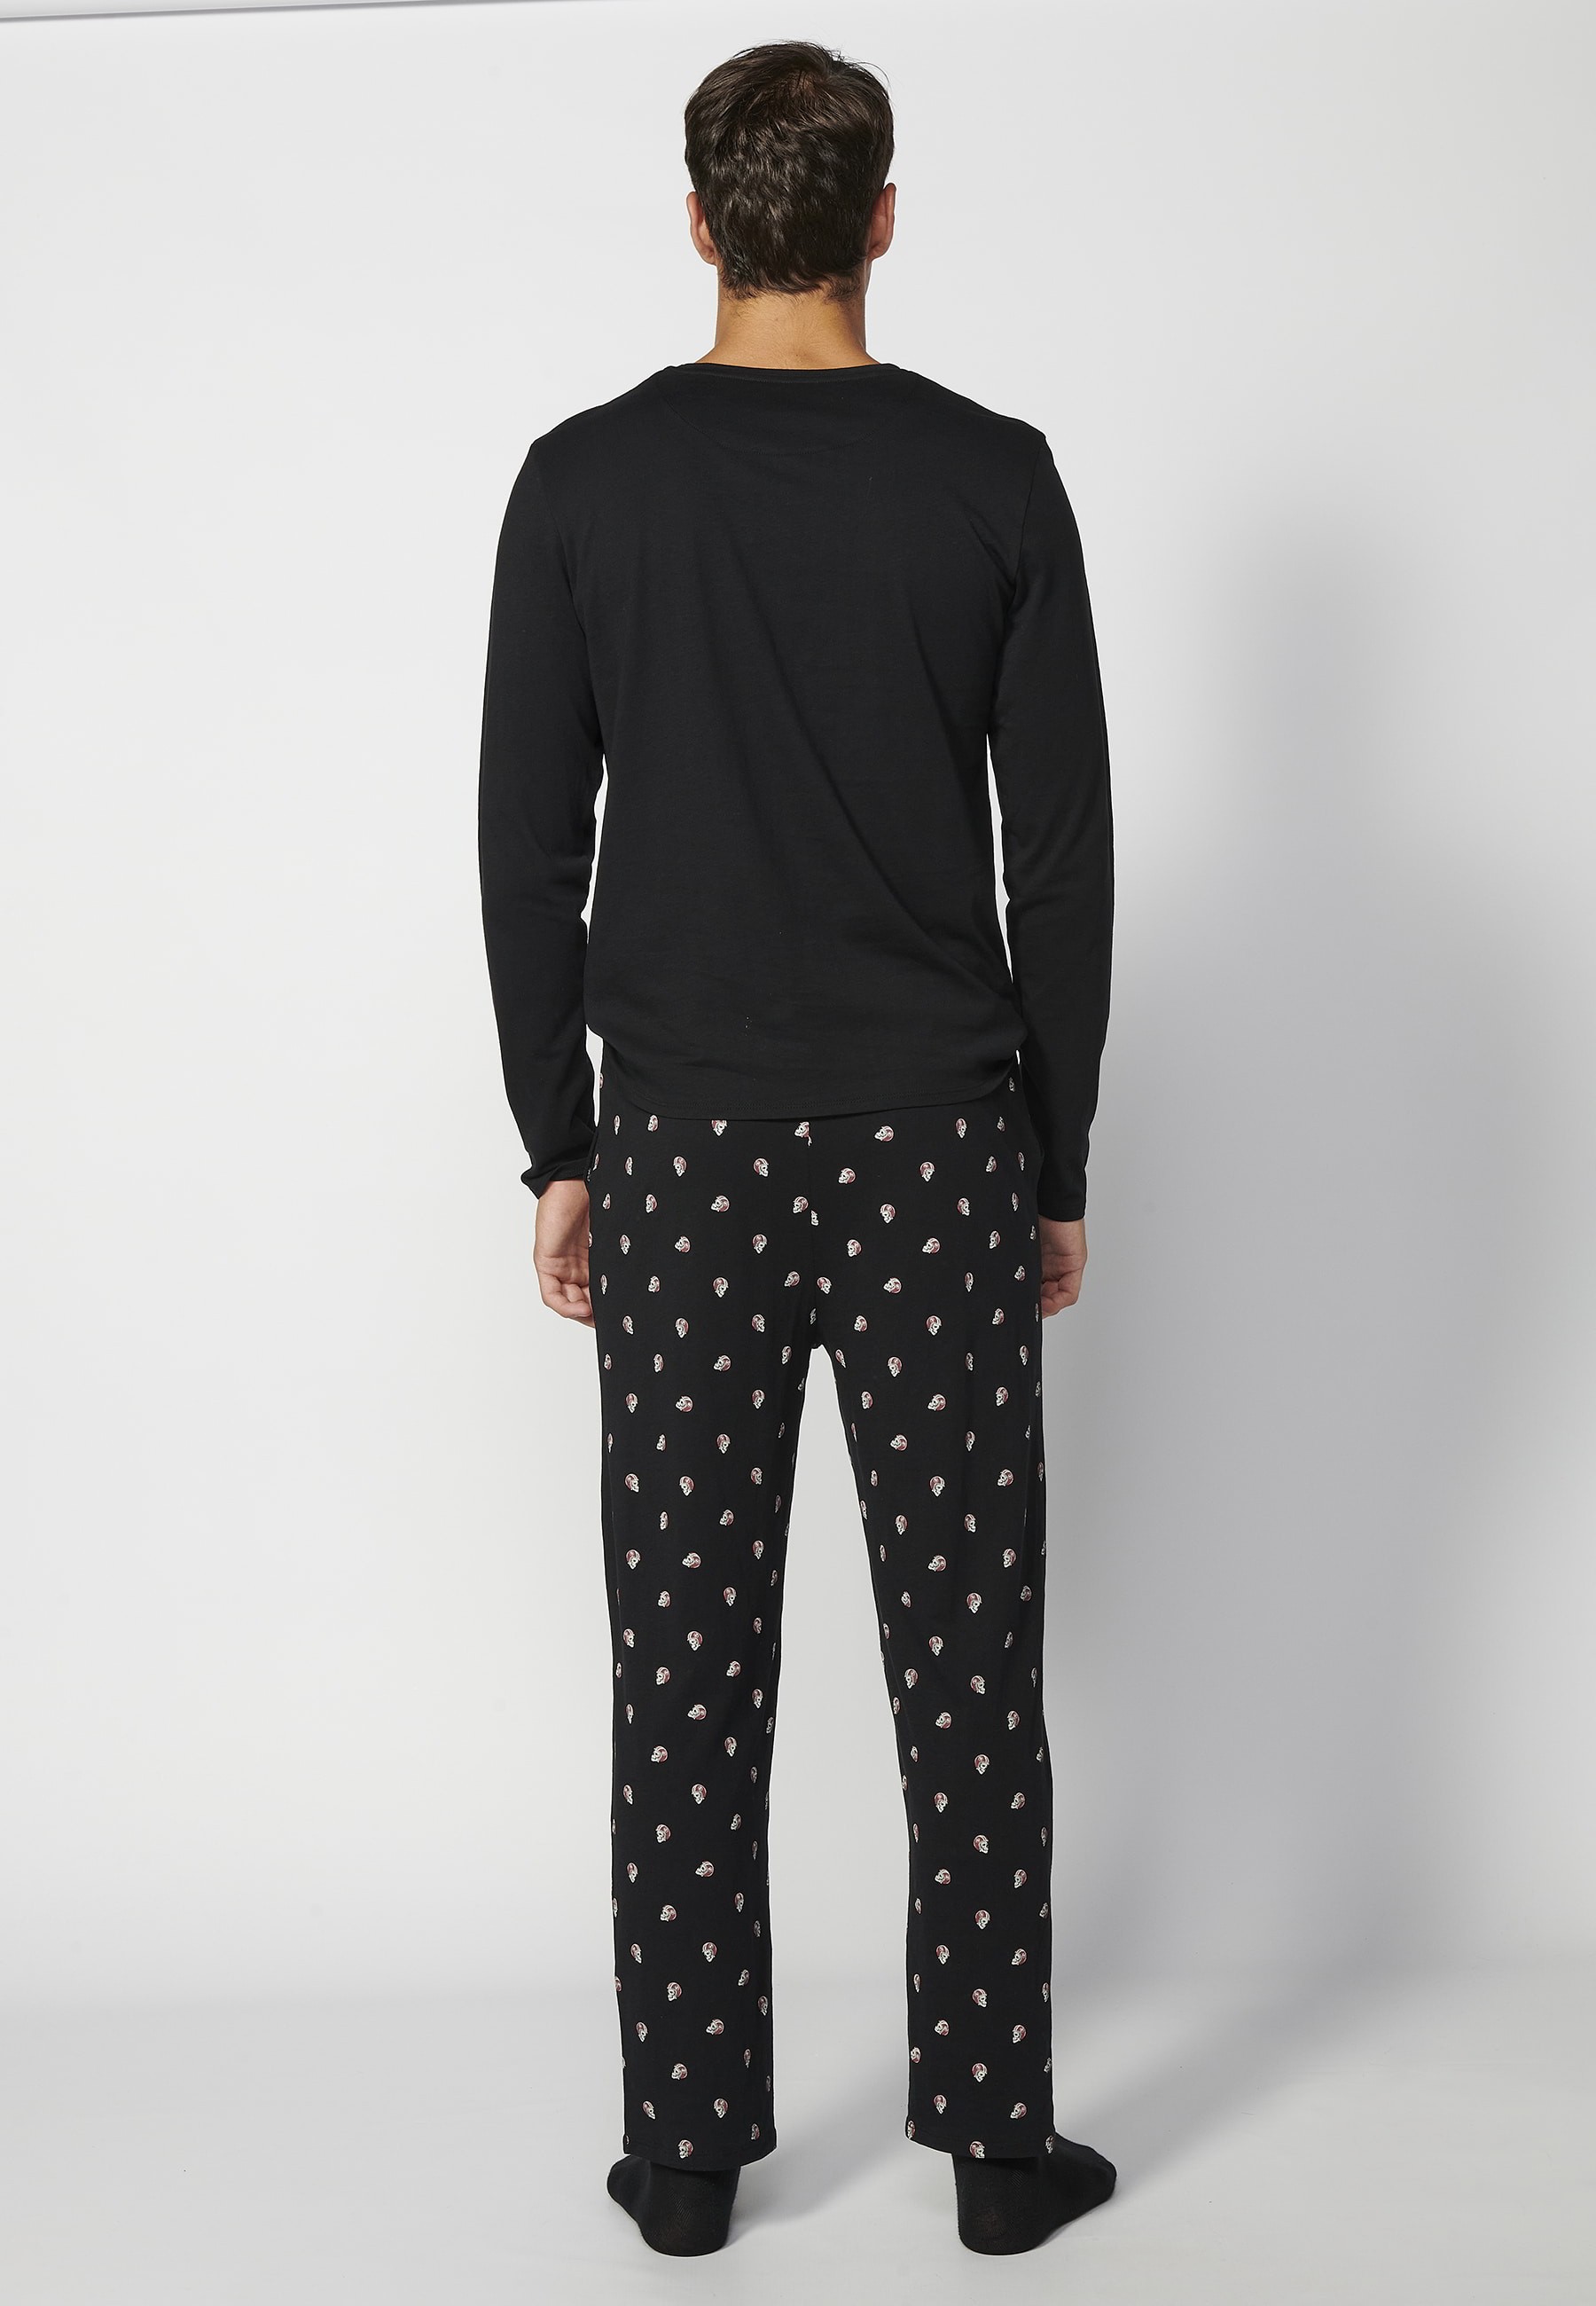 Long black cotton pajamas for men